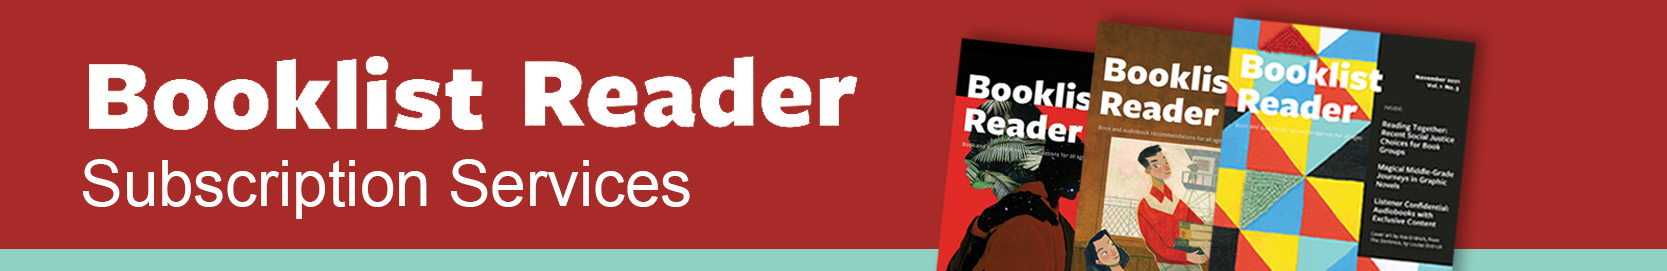 Booklist Reader Logo